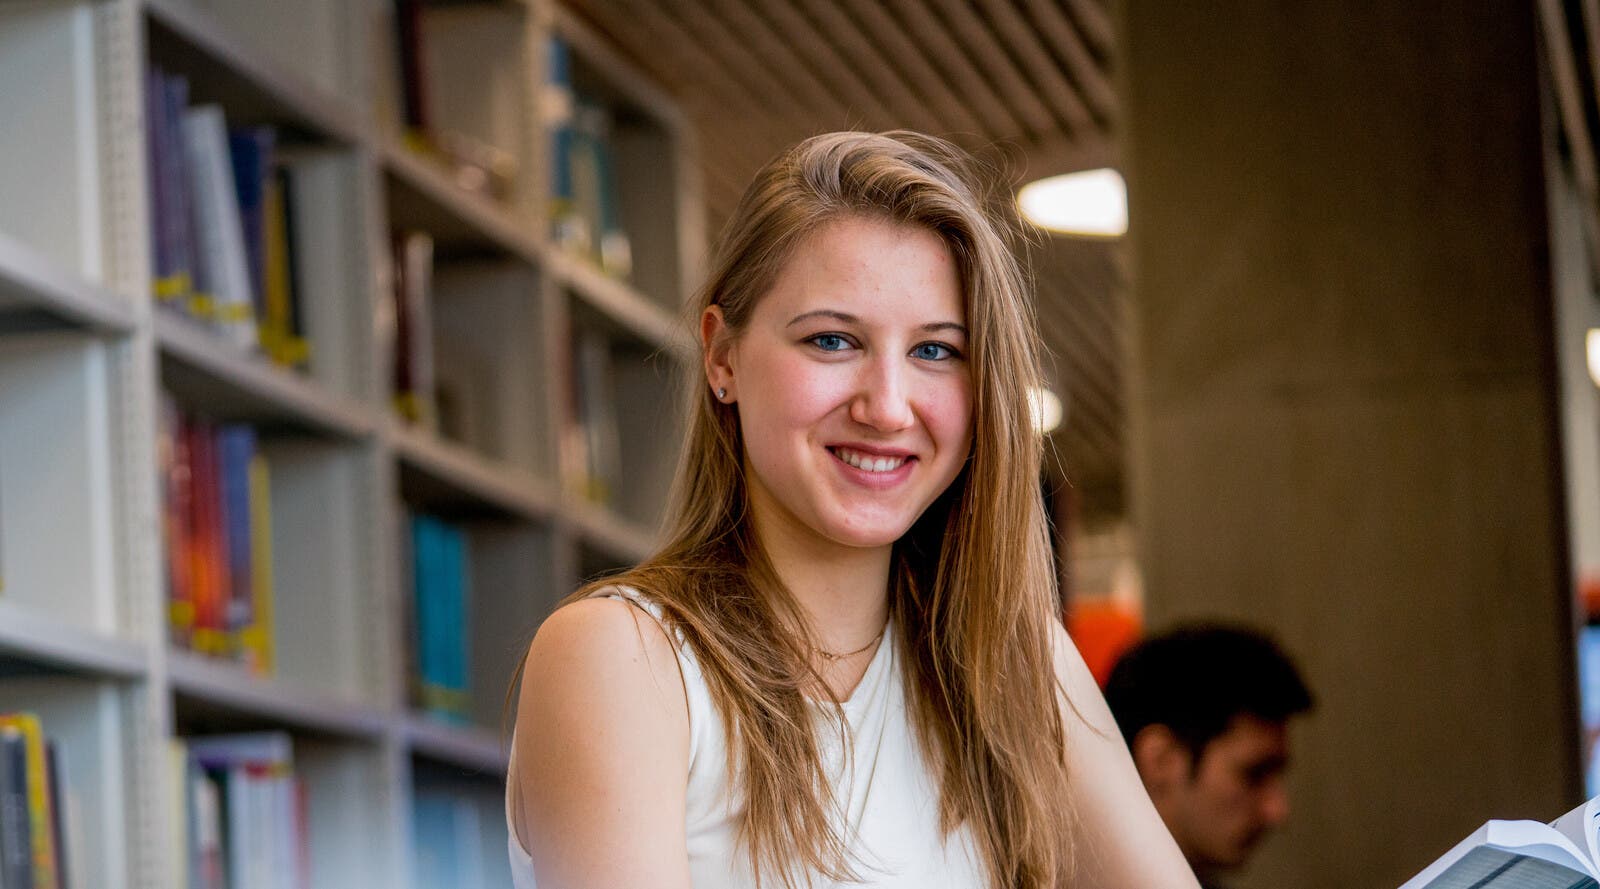 Elizaveta, a student at the University of Leeds